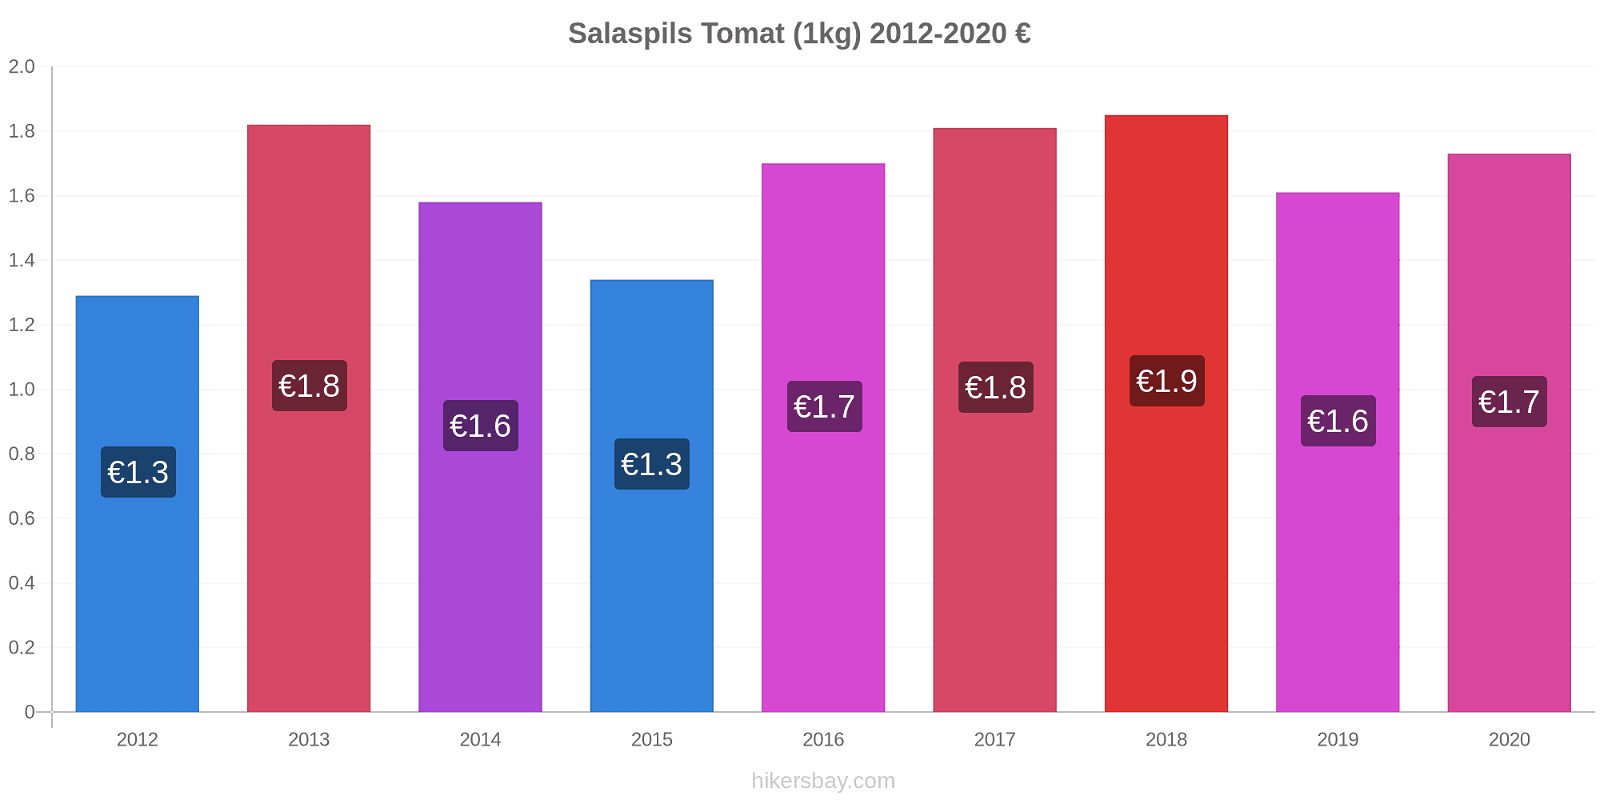 Salaspils perubahan harga Tomat (1kg) hikersbay.com